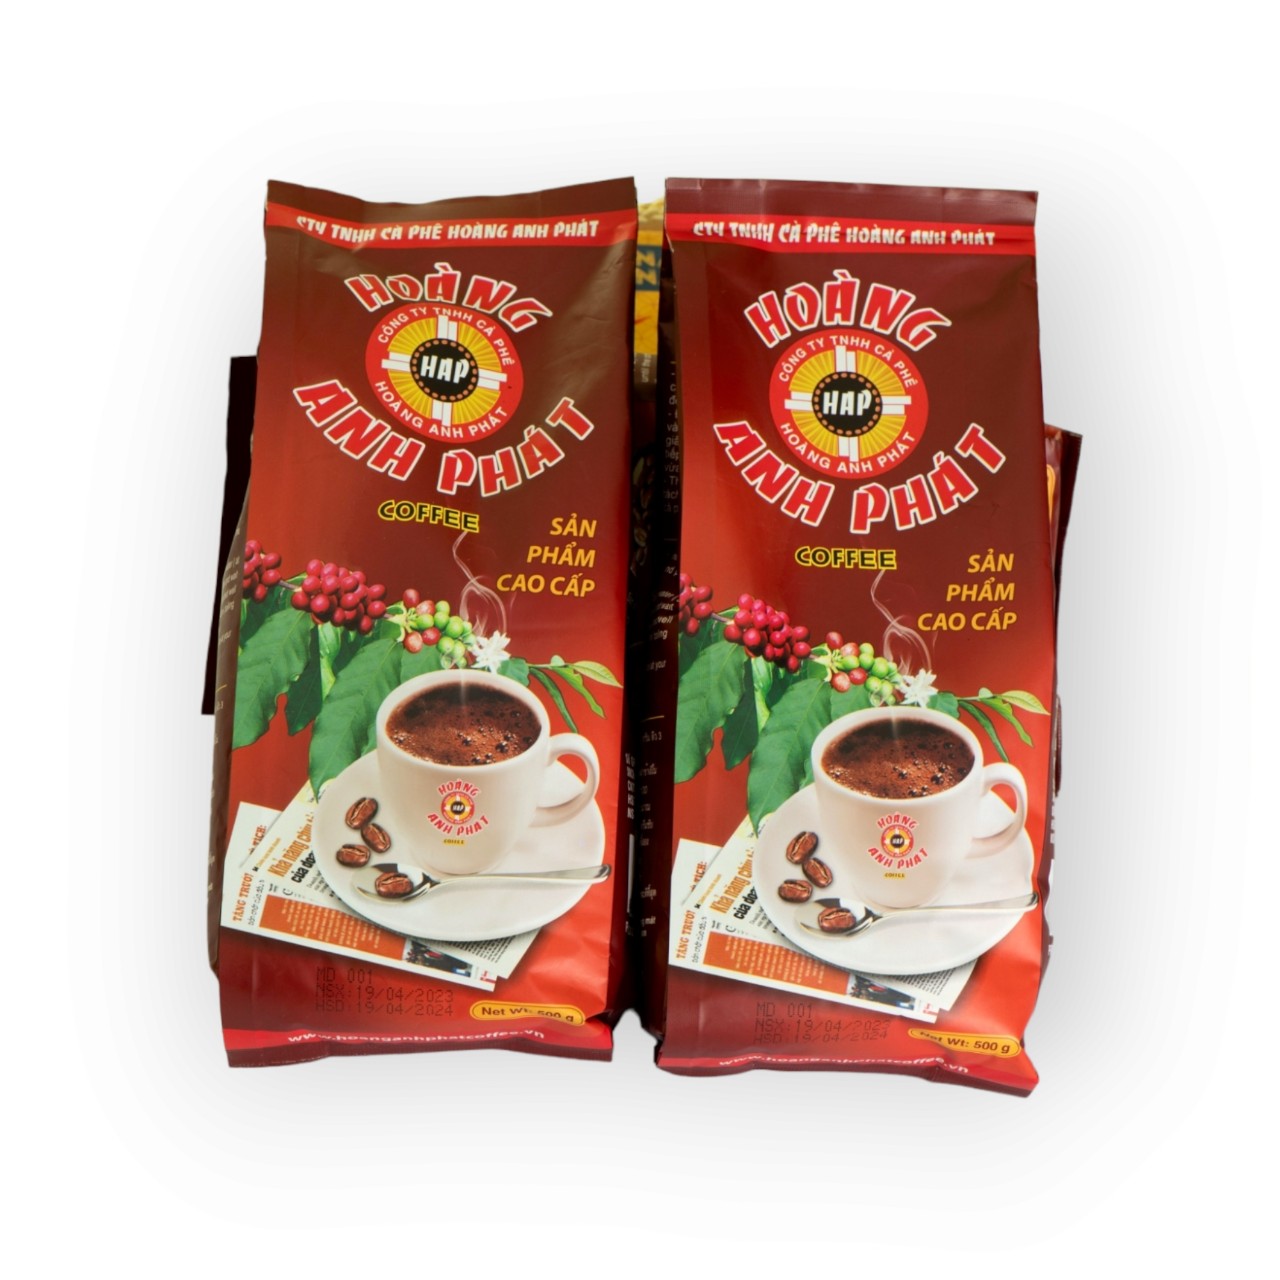 Rina powder coffee 500g package